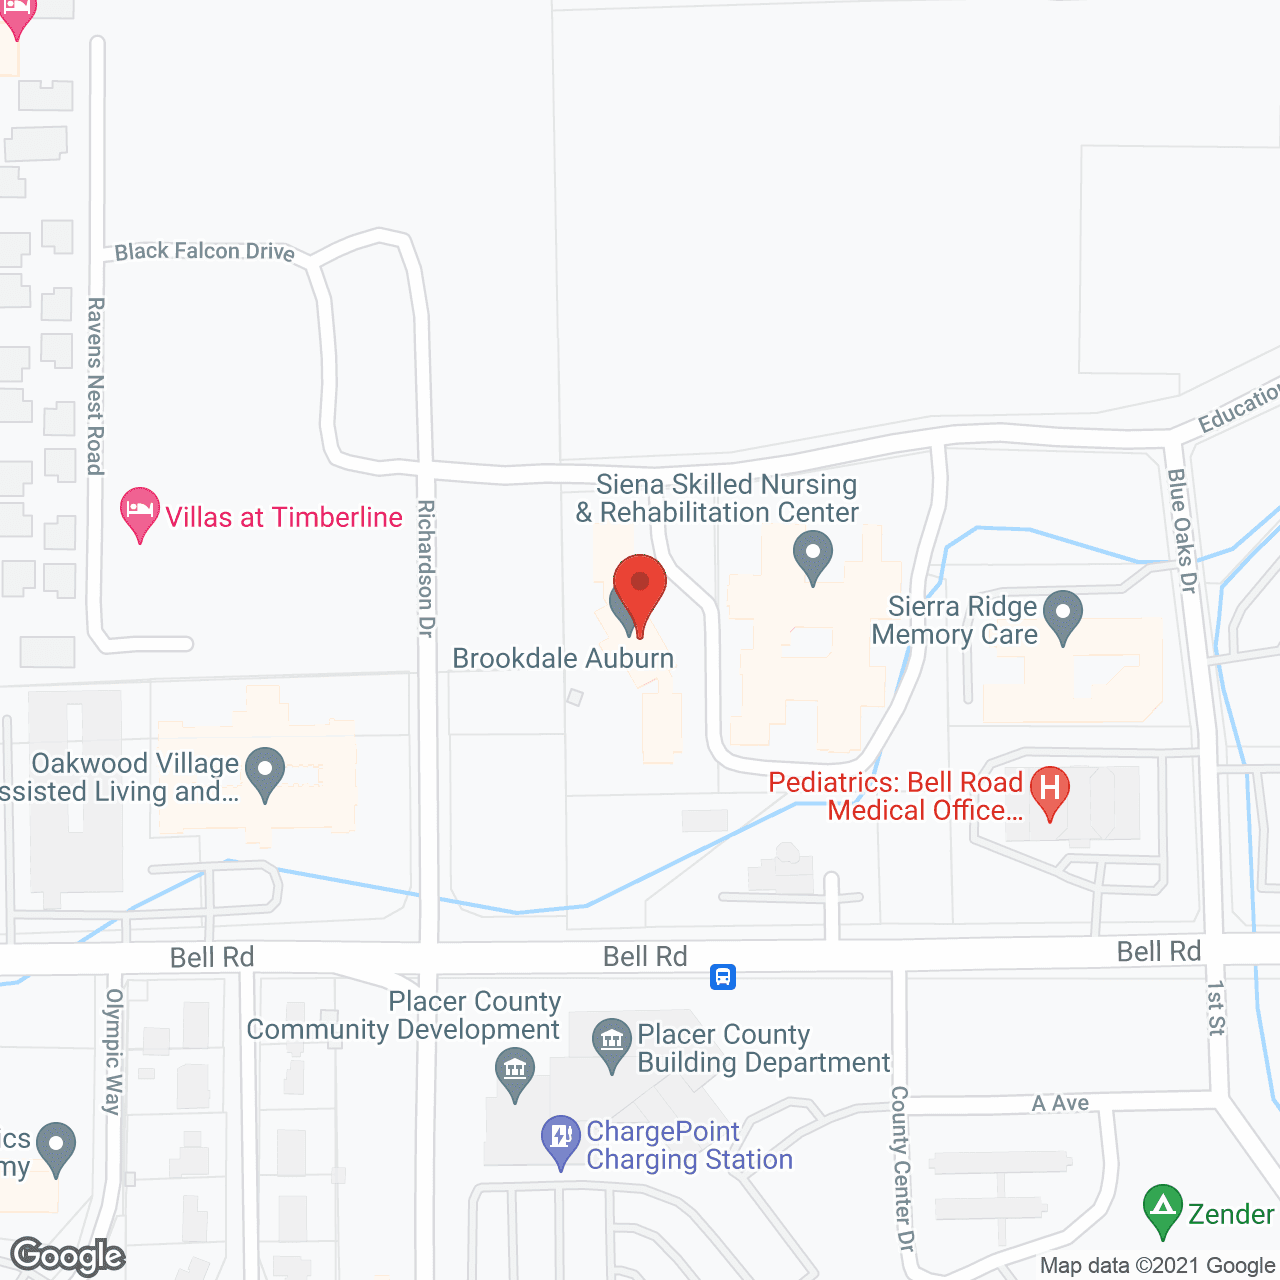 Brookdale Auburn in google map